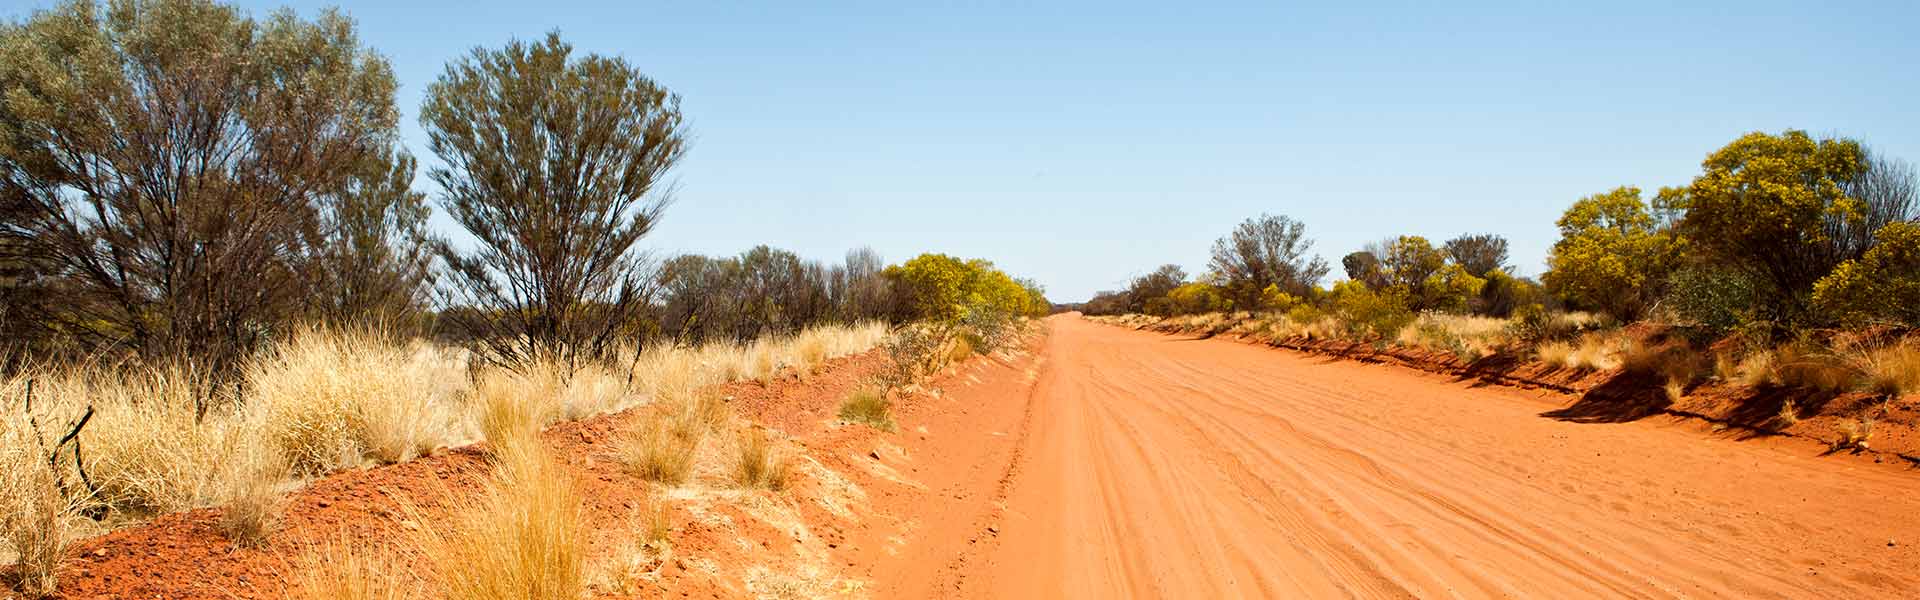 Alice Springs dirt road